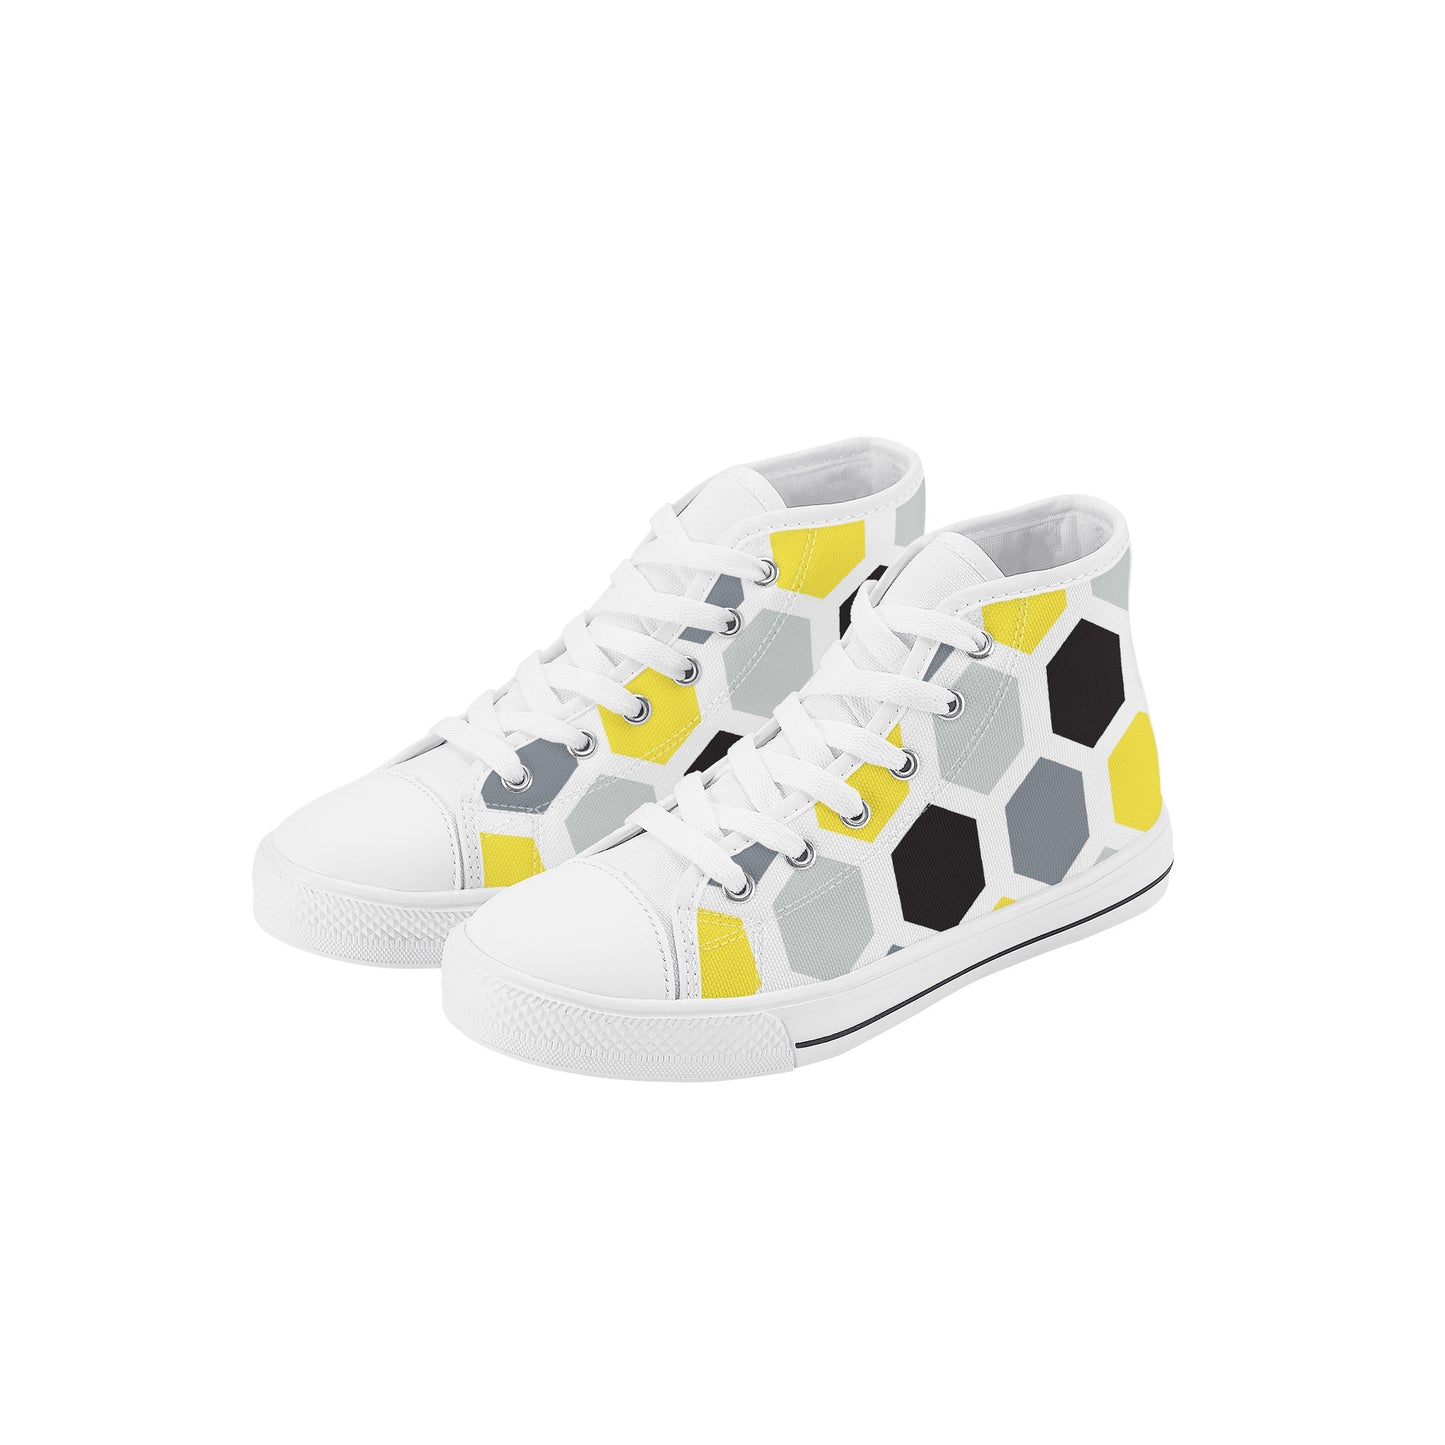 Kids High Top Sneakers - Black/Yellow